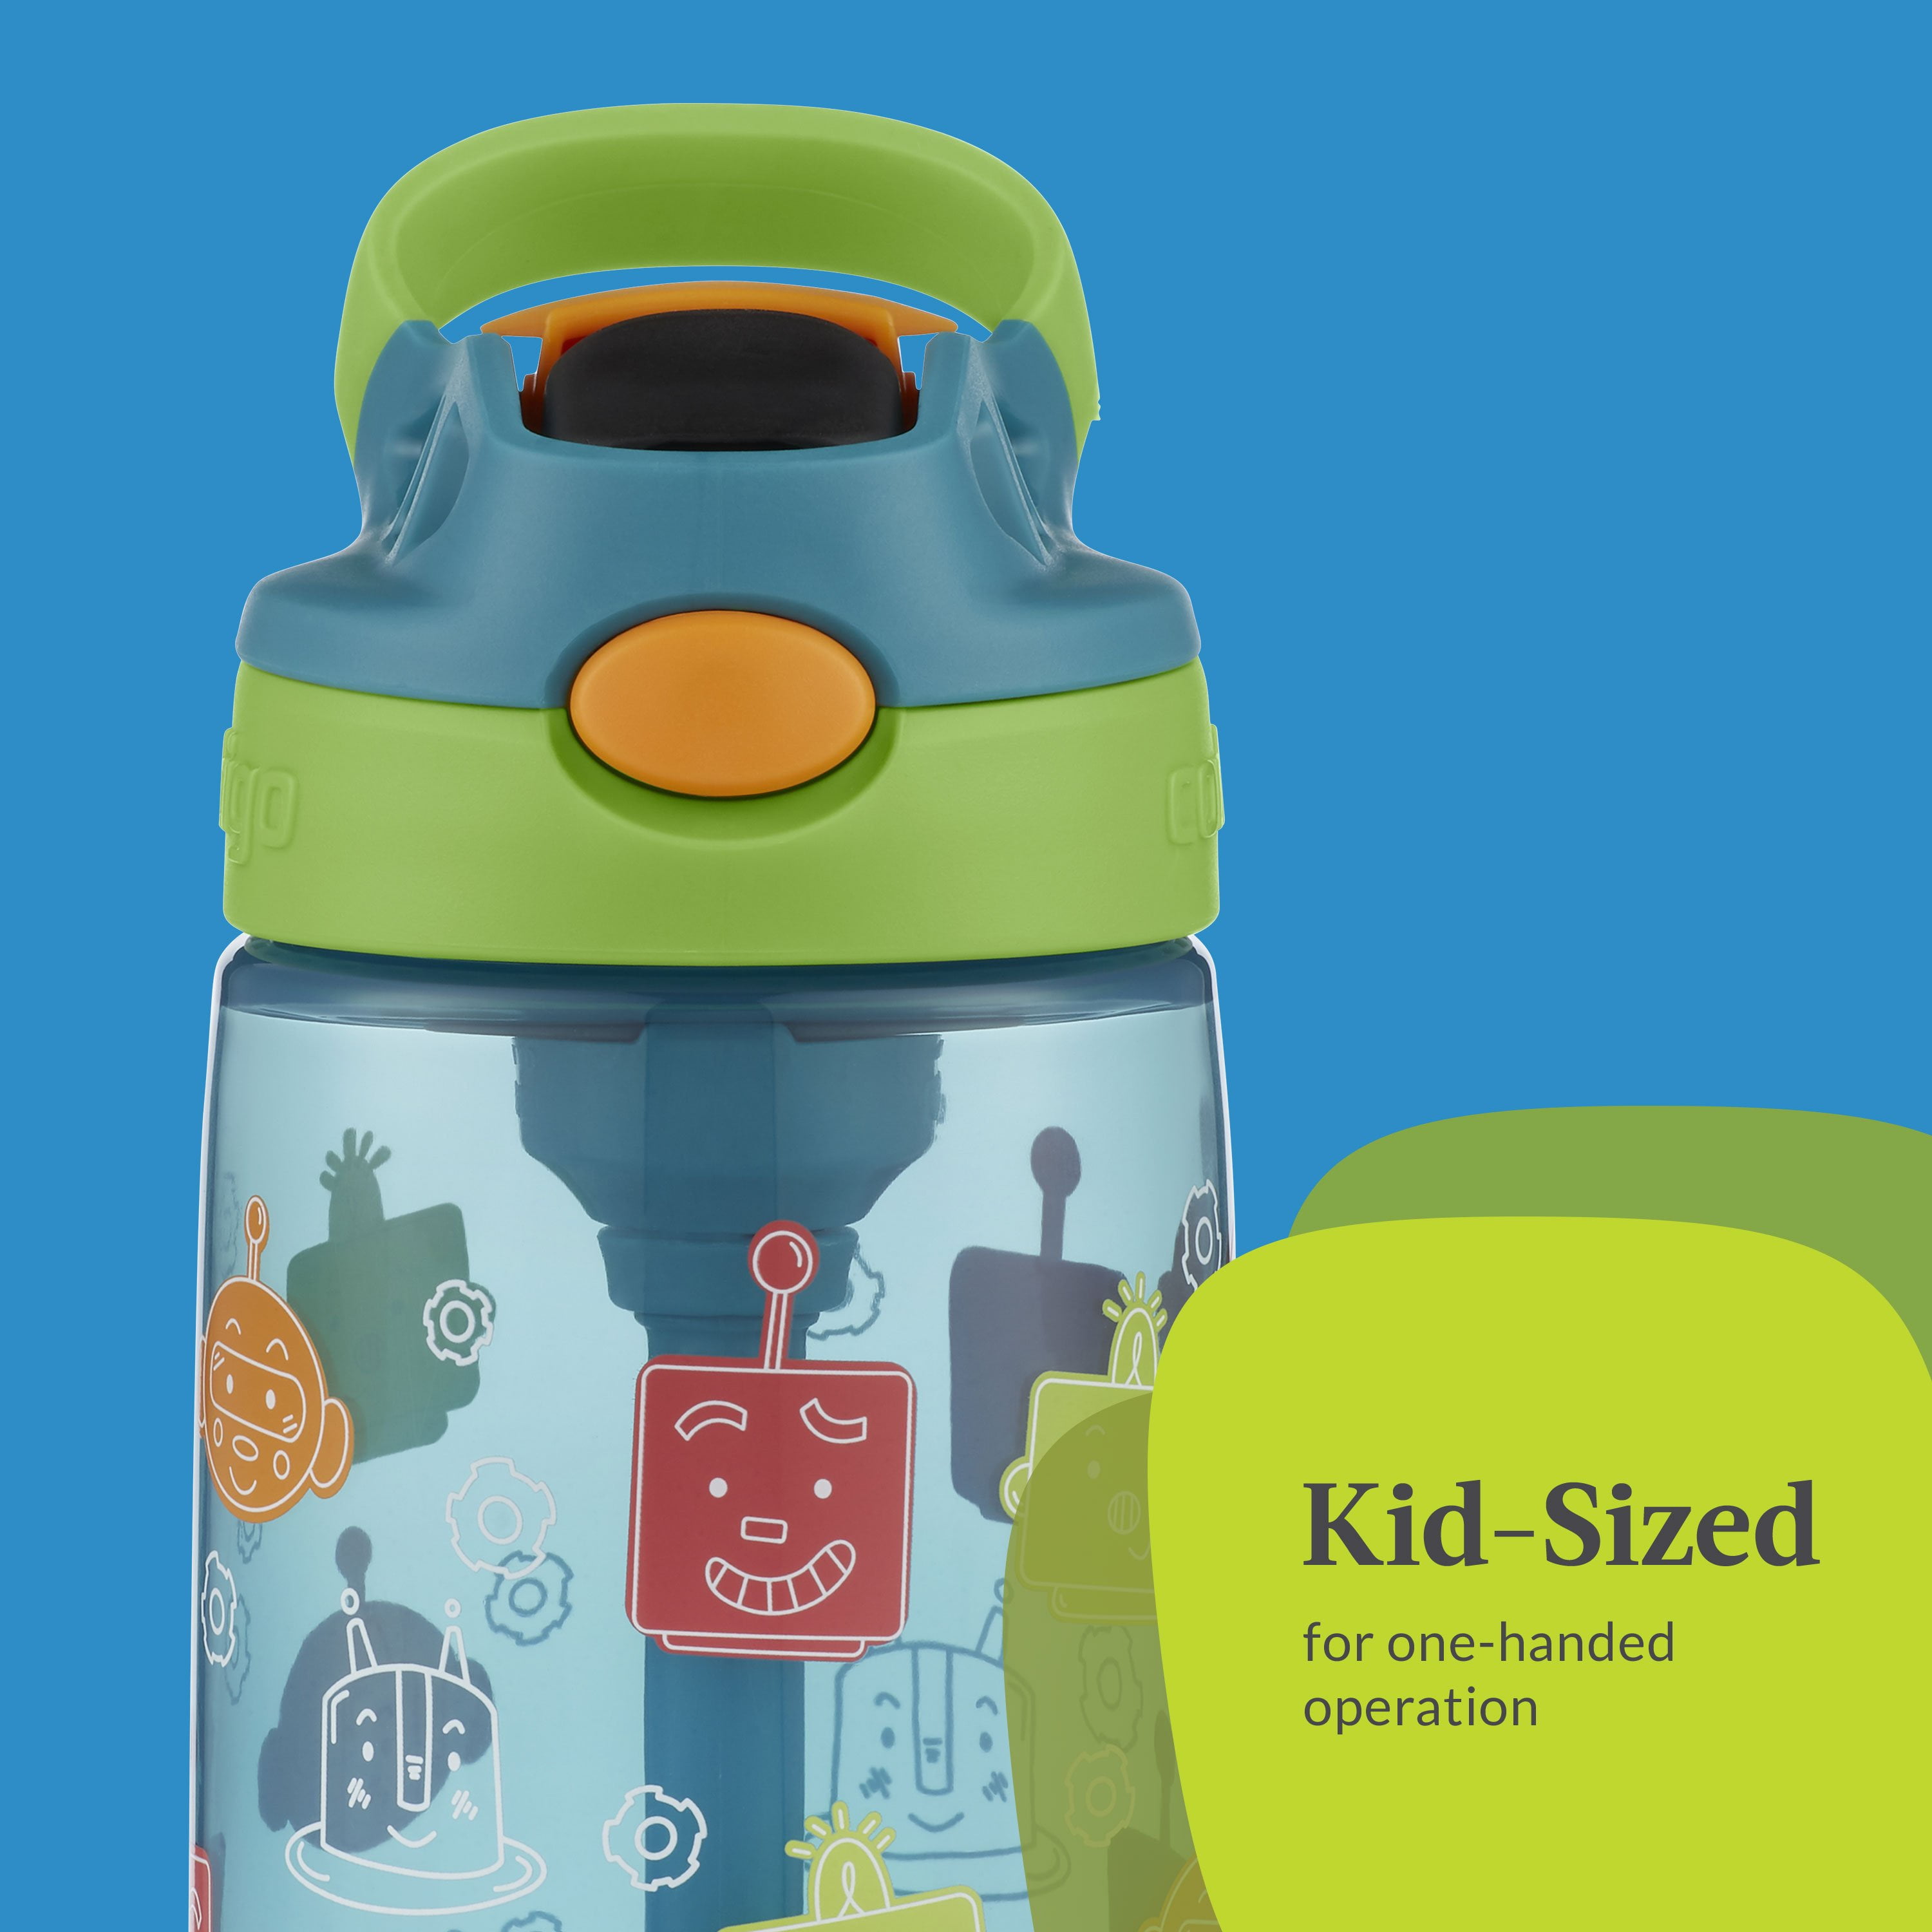 Contigo® Kids Water Bottle with Redesigned AUTOSPOUT® Straw, 14 oz